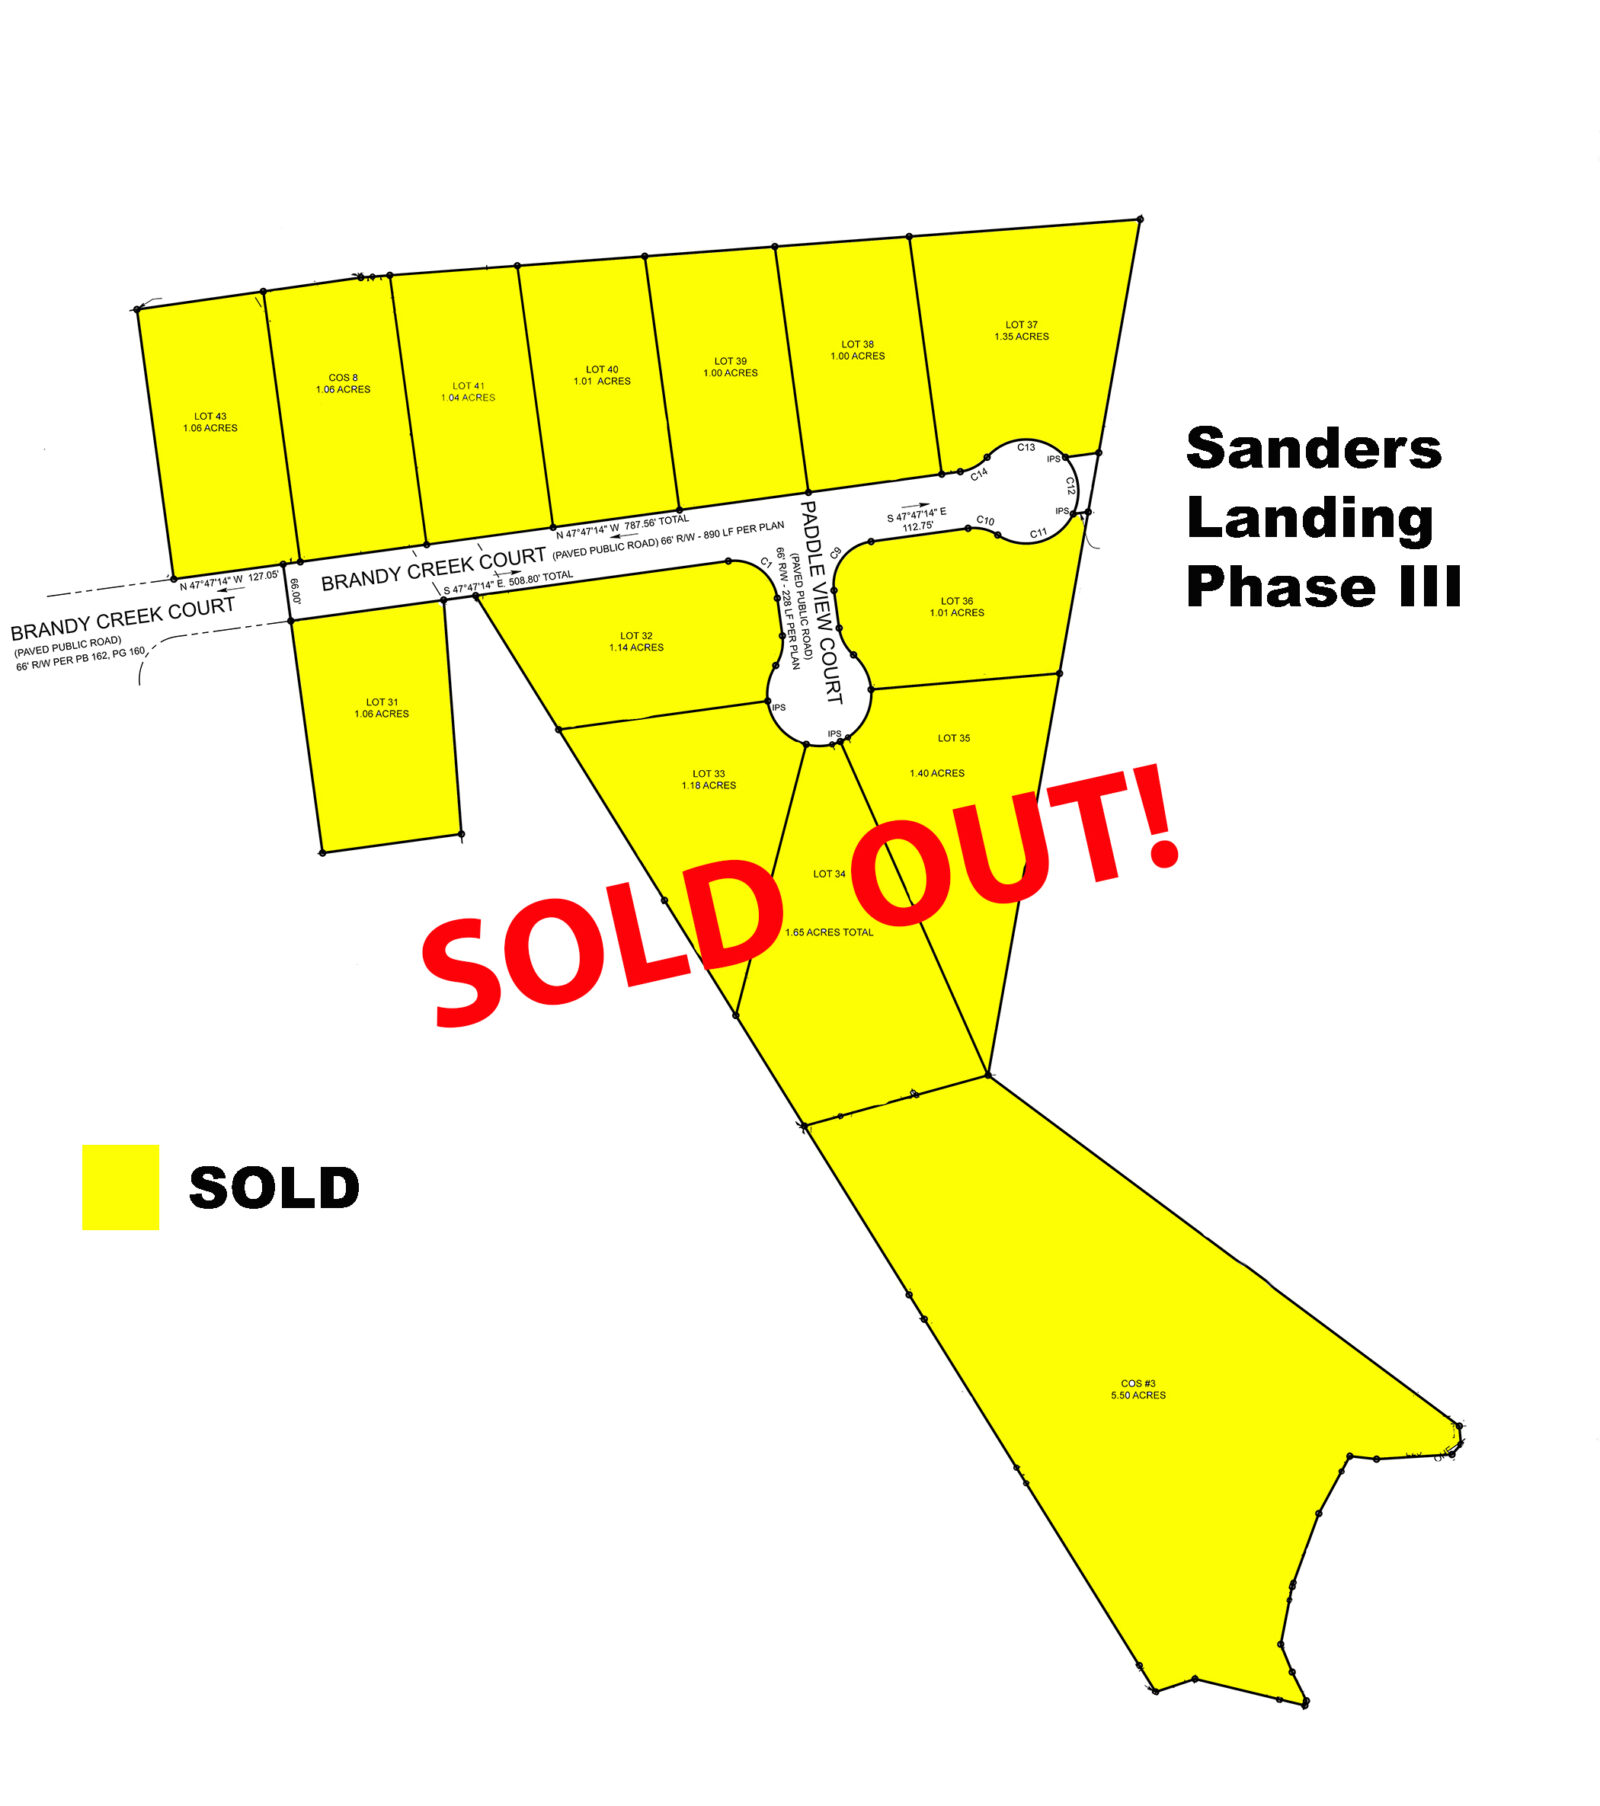 Sanders Ph 3 prelim - sold